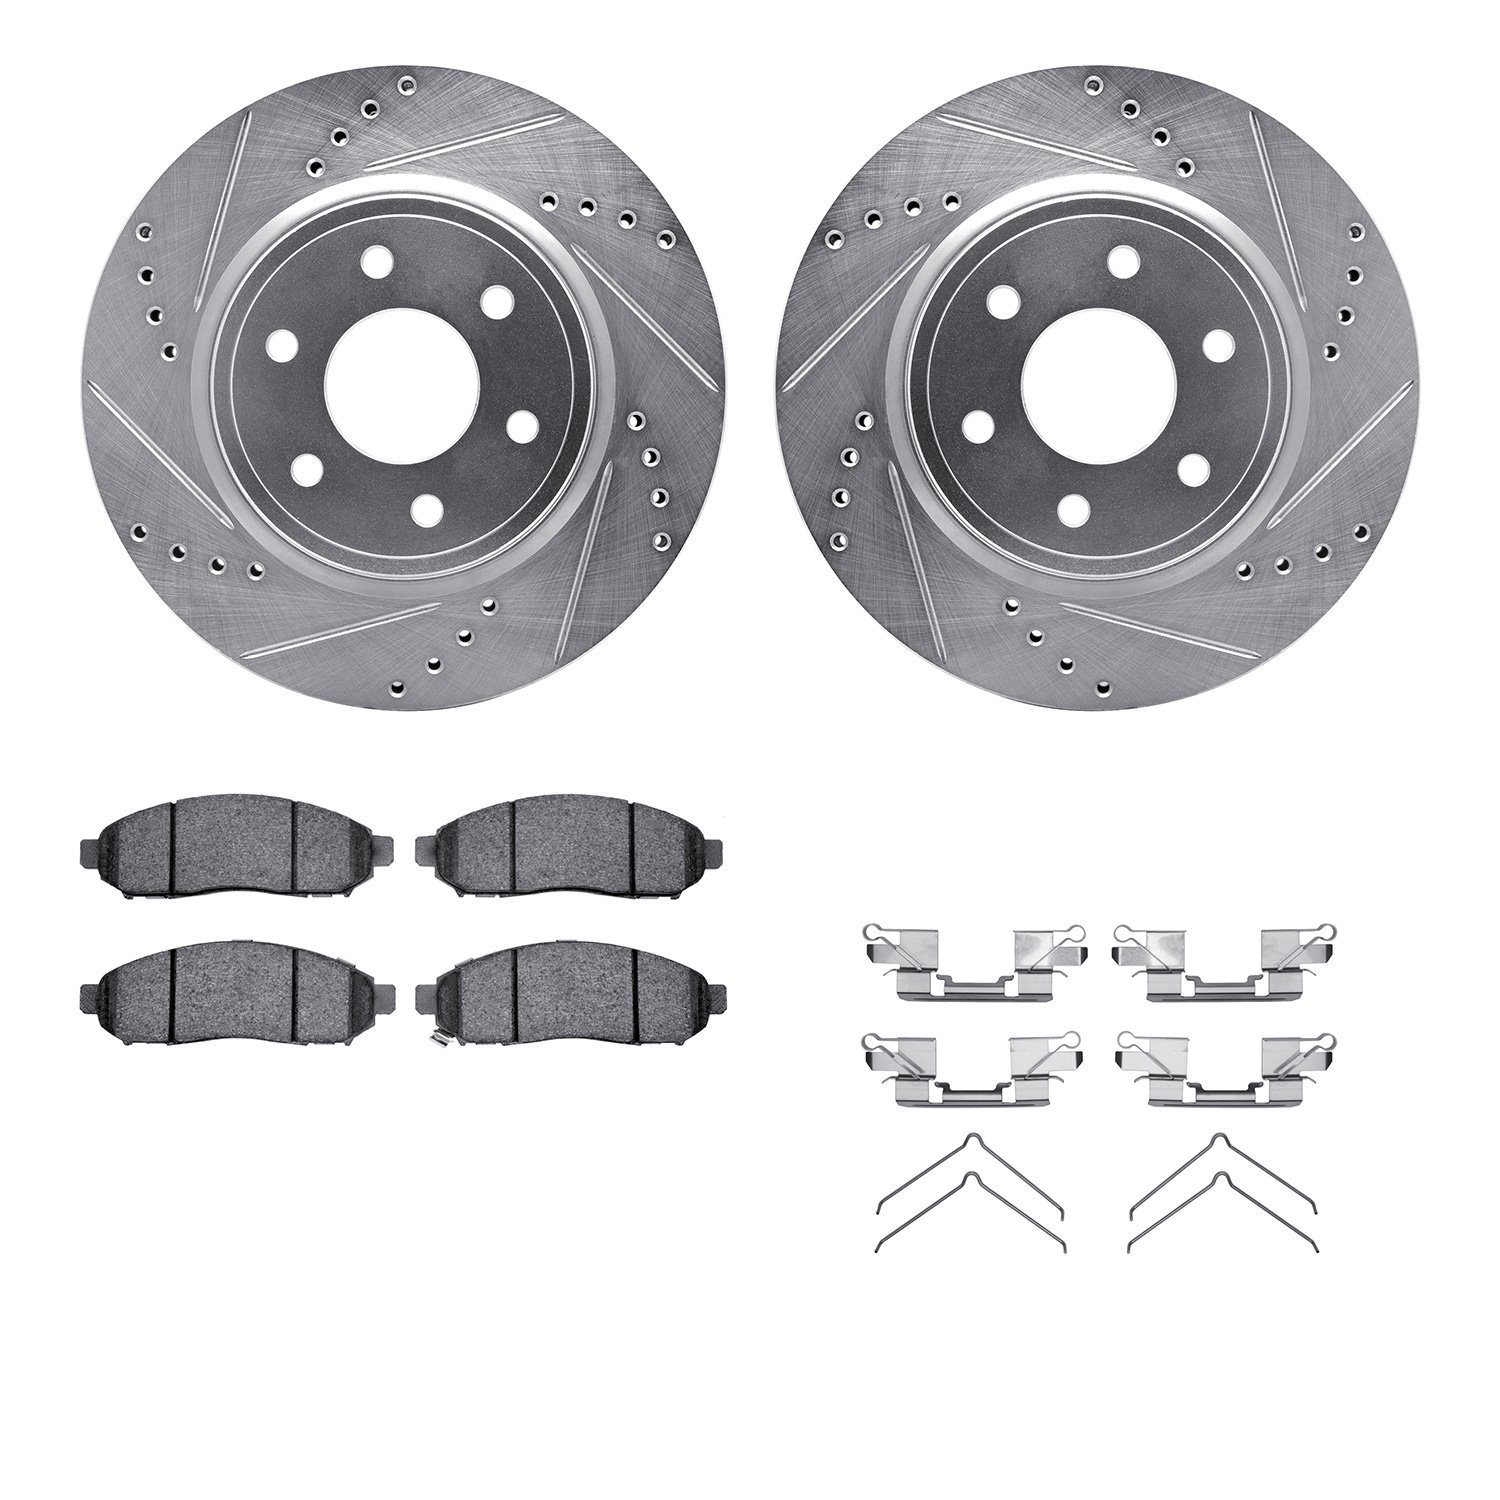 7512-67107 Drilled/Slotted Brake Rotors w/5000 Advanced Brake Pads Kit & Hardware [Silver], Fits Select Multiple Makes/Models, P